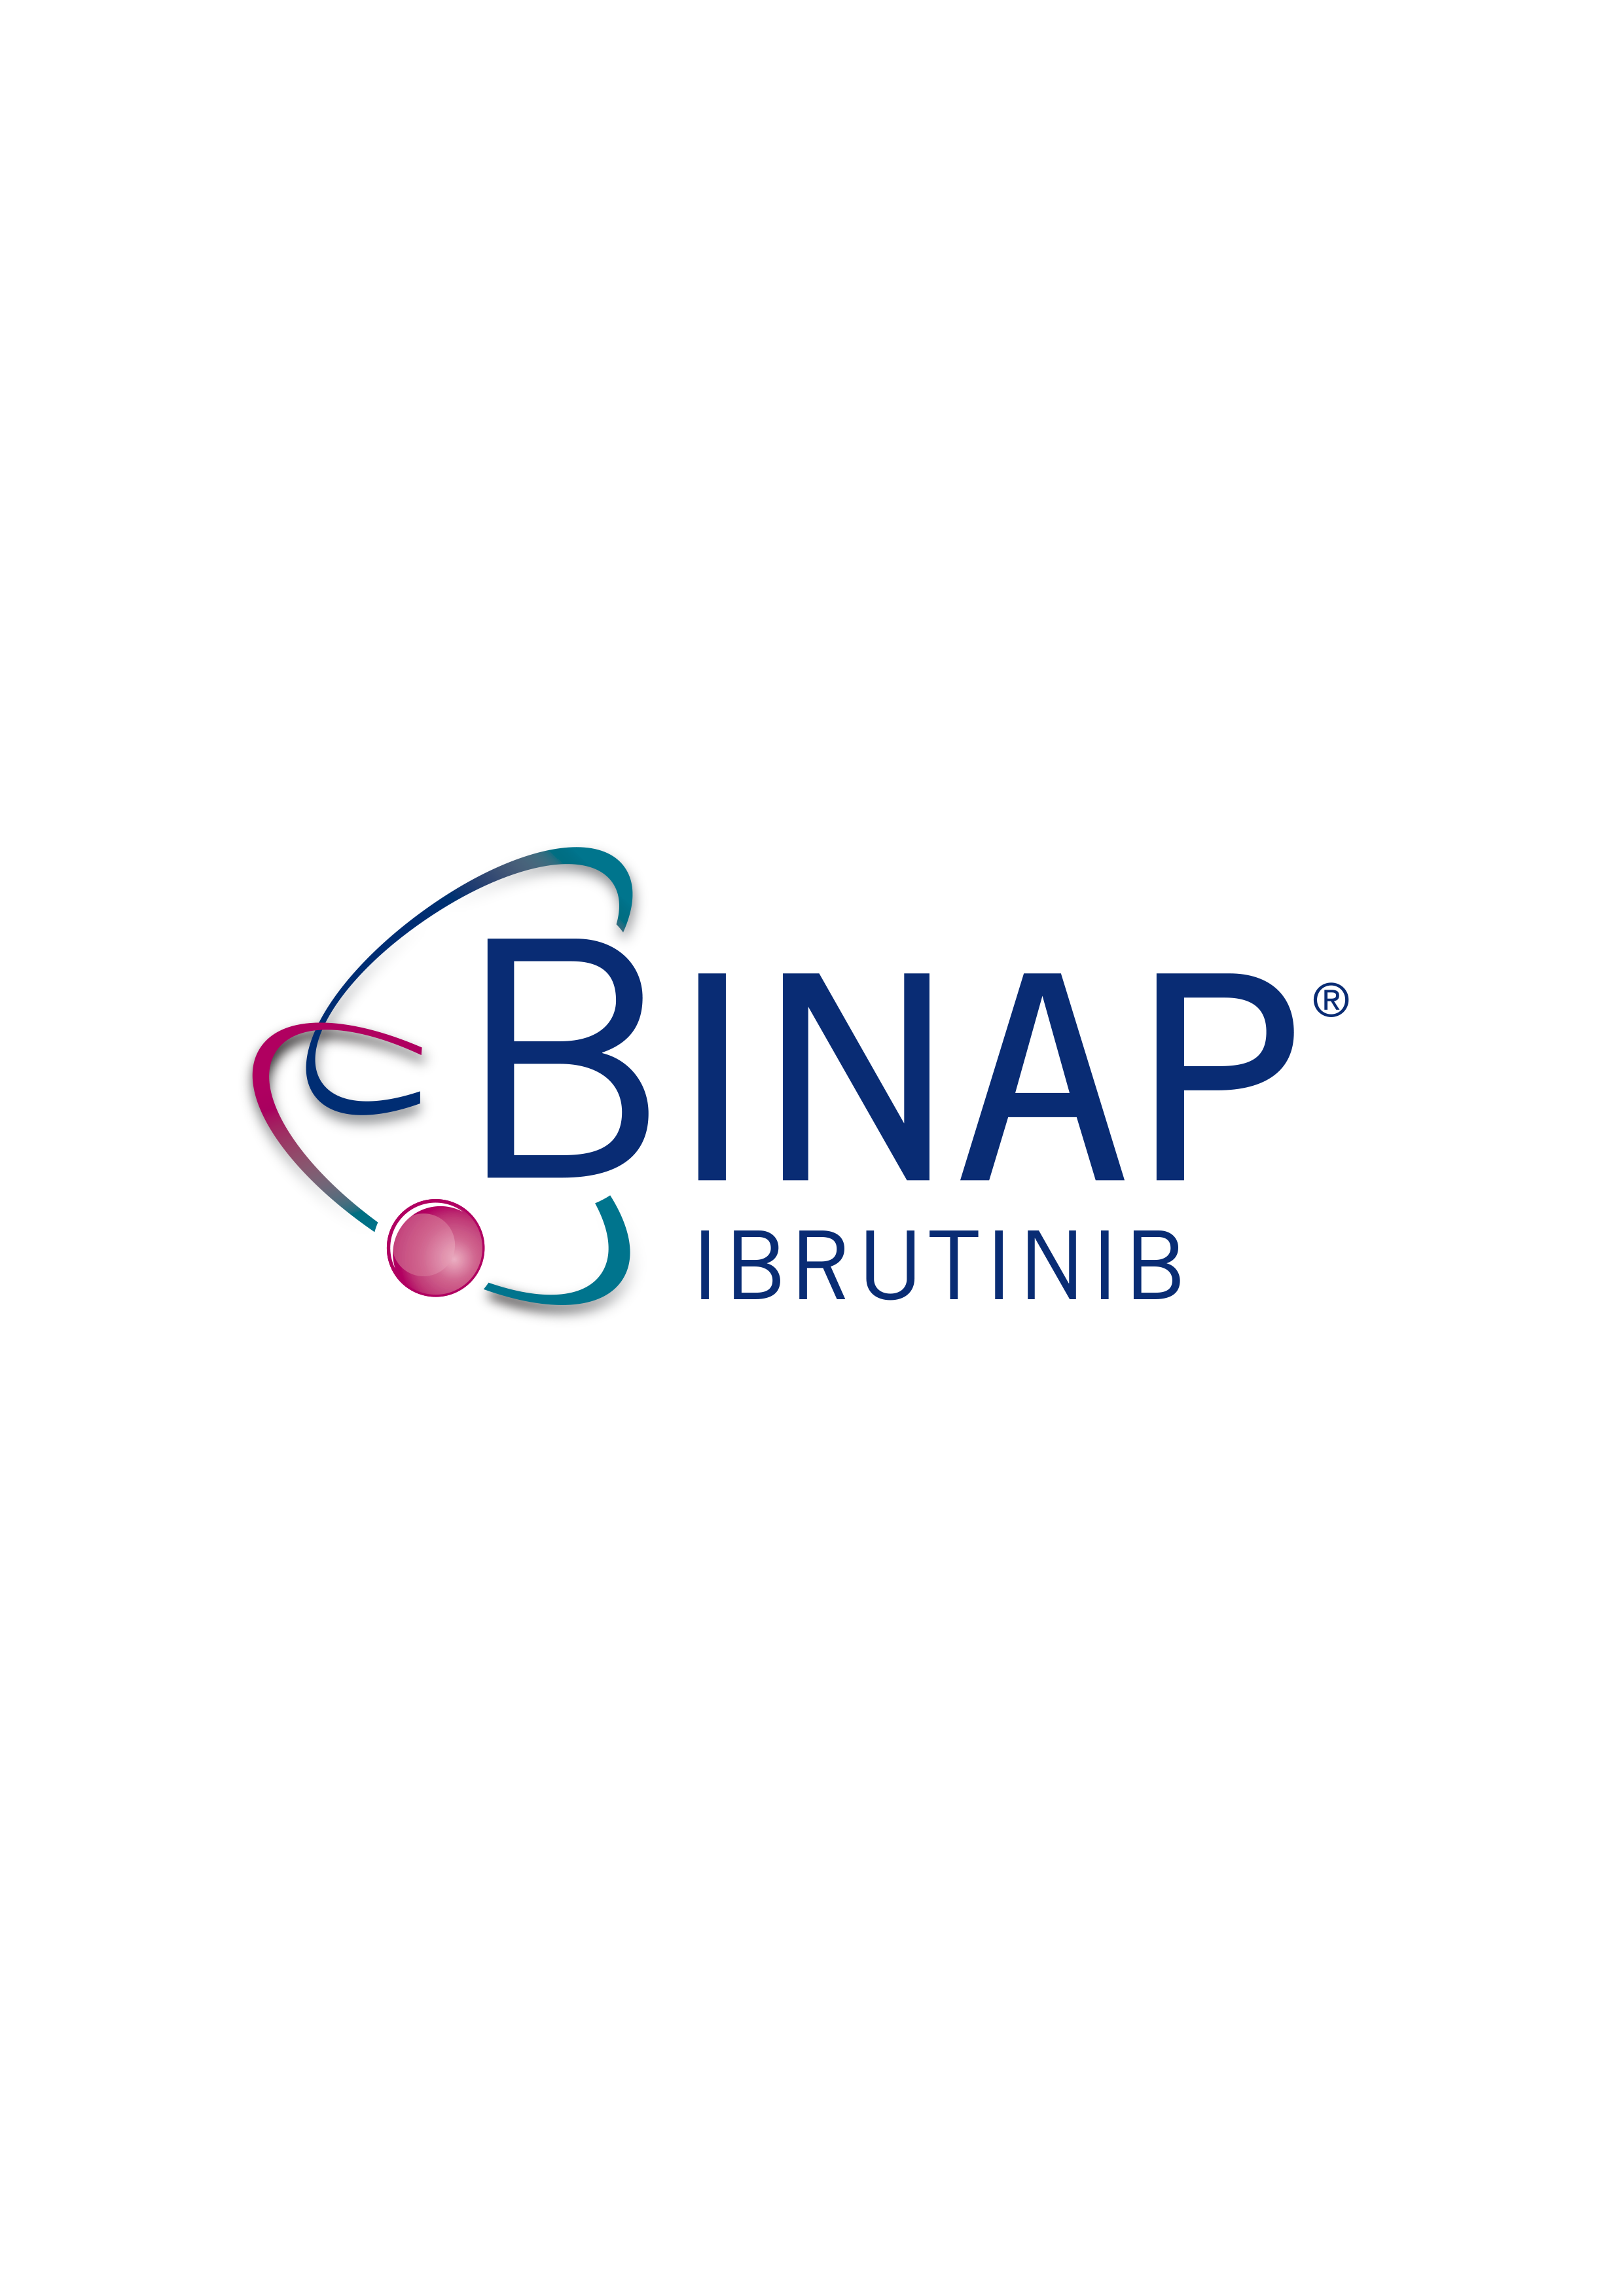 Binap ®